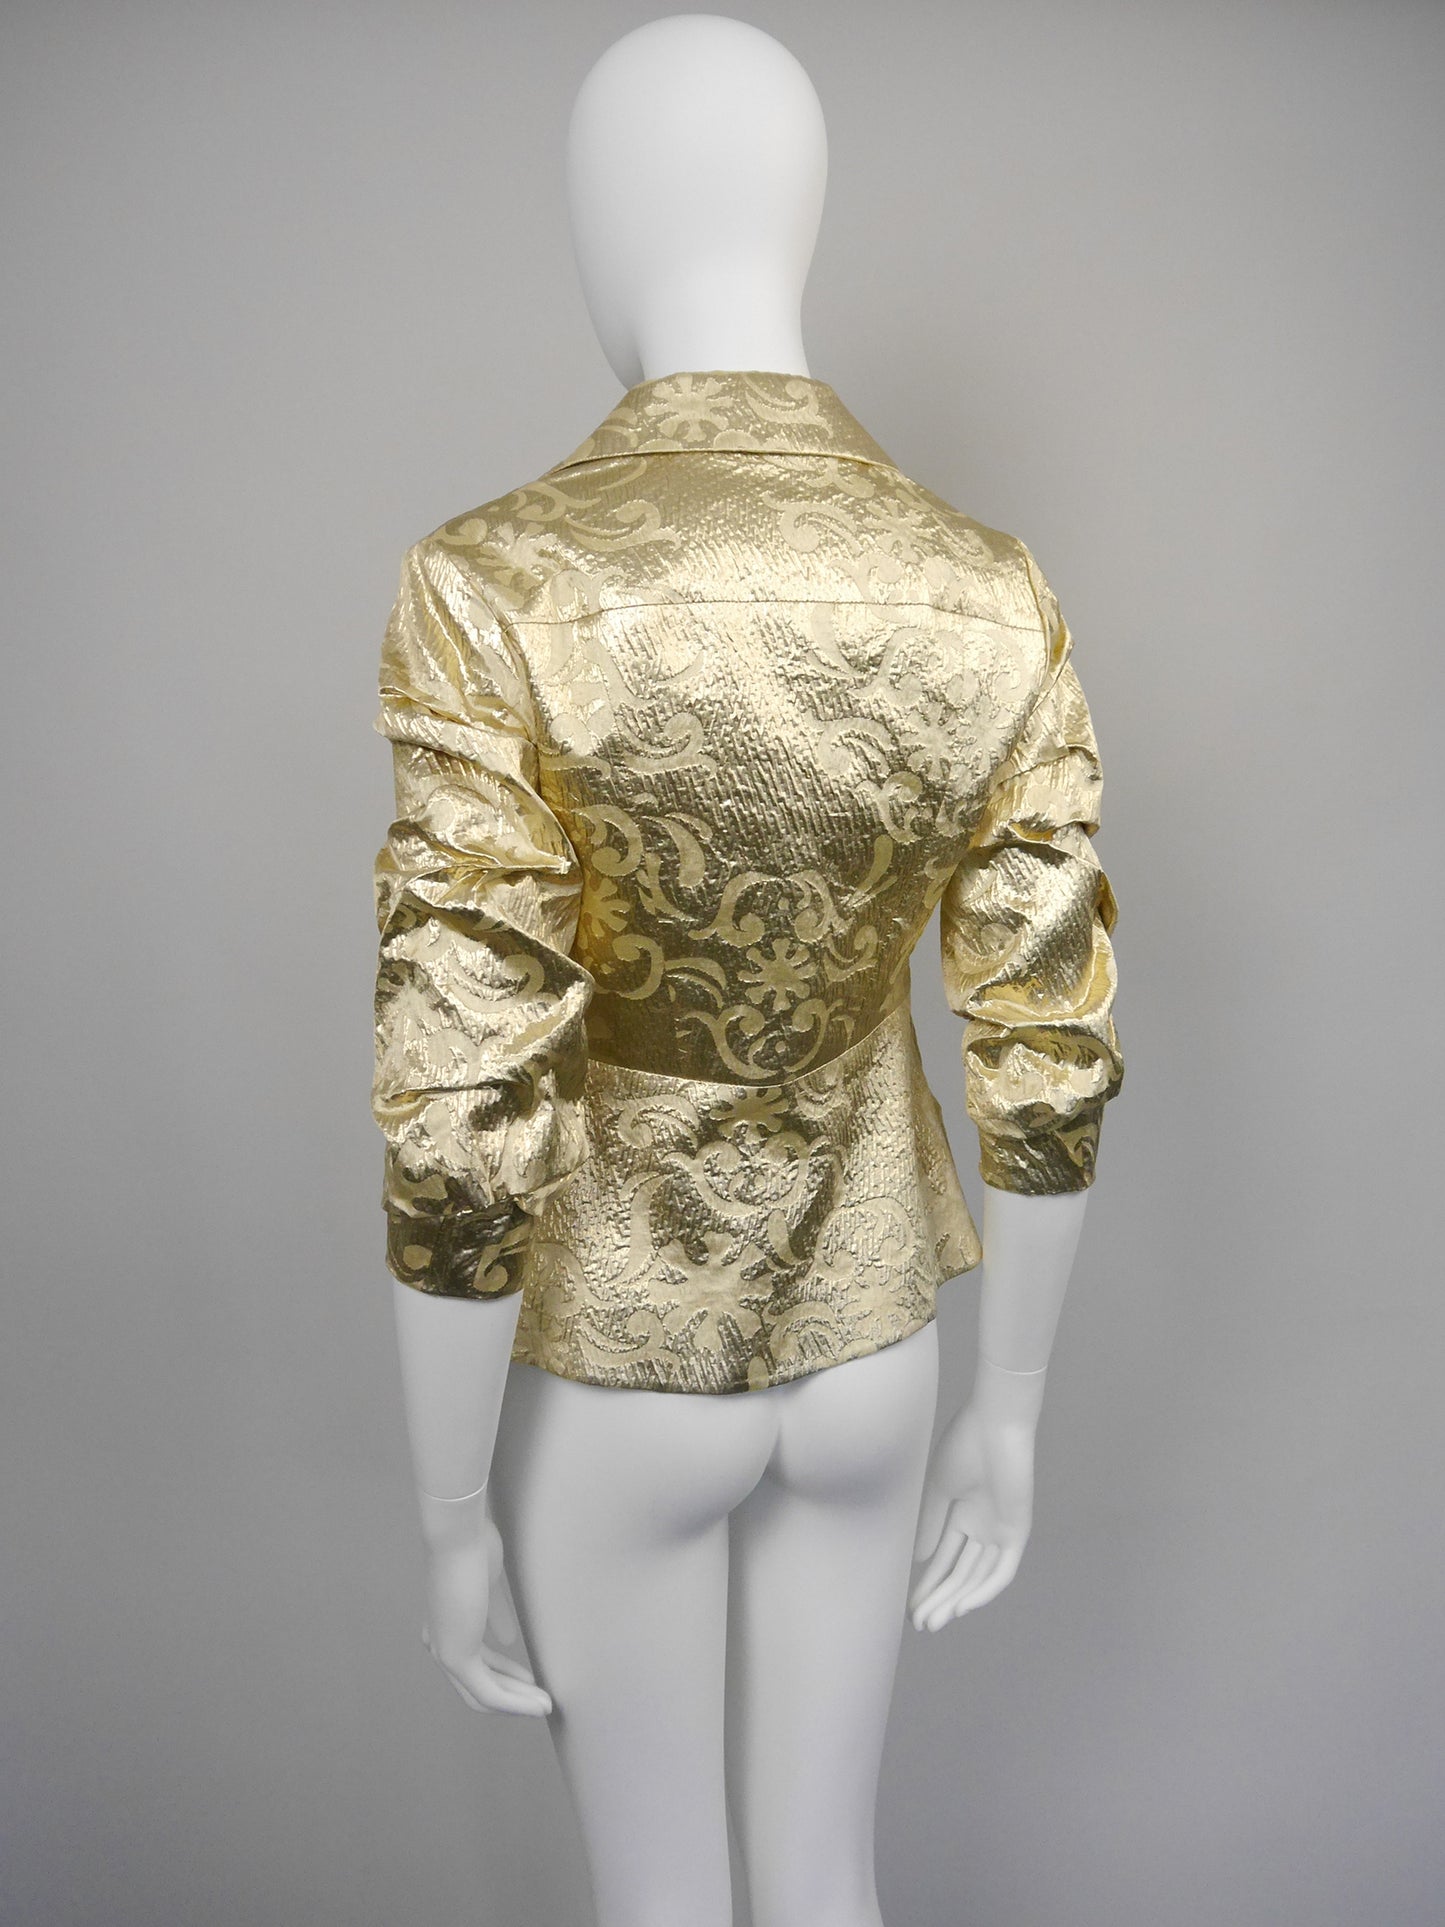 CHRISTIAN LACROIX Fall 1999 Vintage Sculptural Metallic Gold Brocade Evening Jacket Size XS